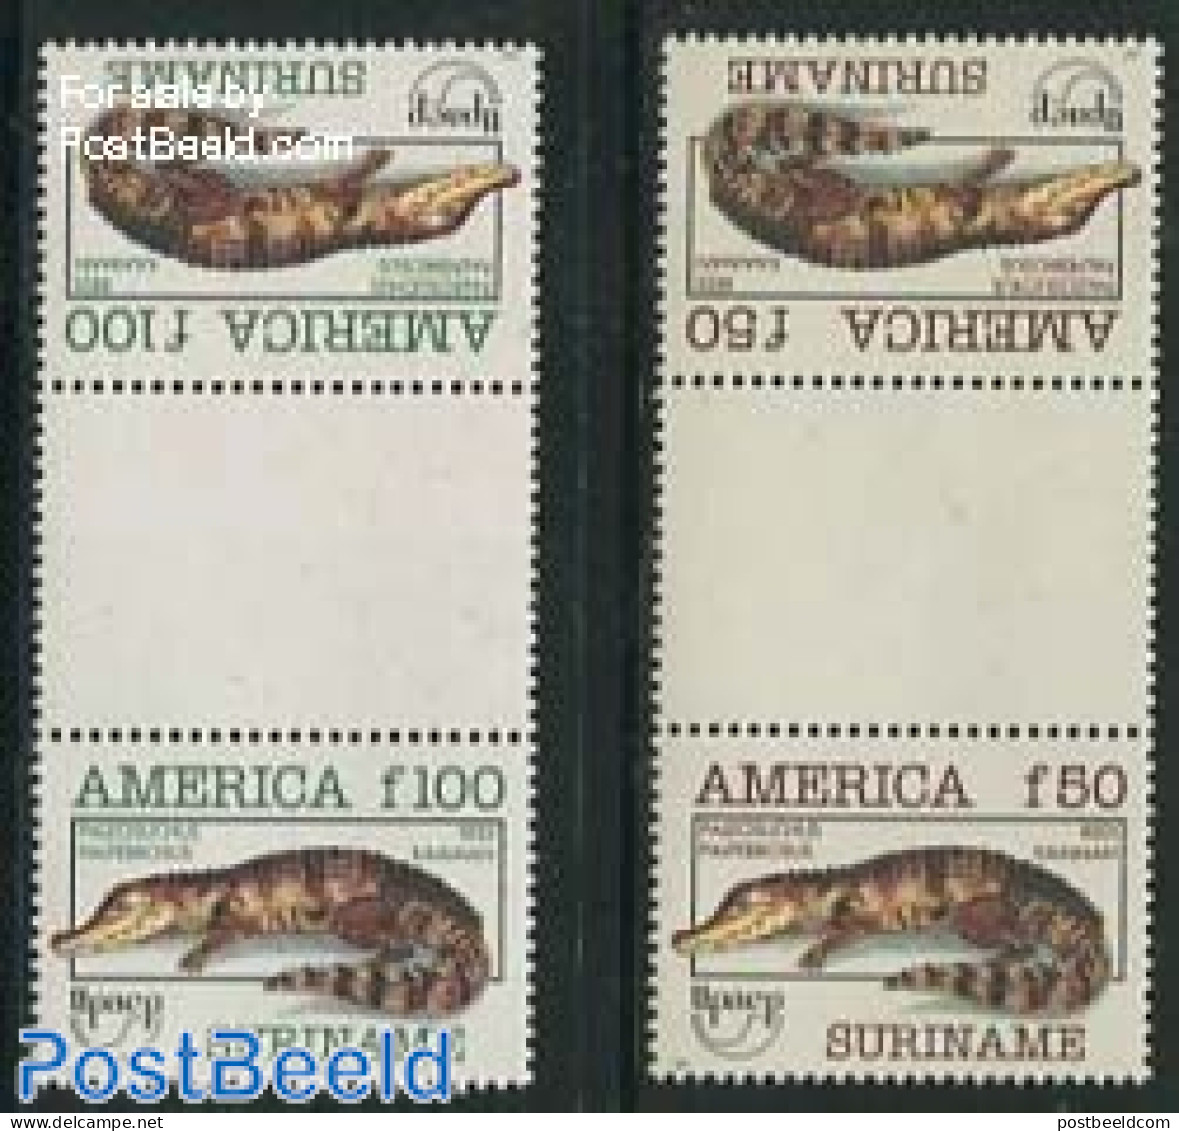 Suriname, Republic 1993 UPAE, Crocodile 2v, Gutter Pairs, Mint NH, Nature - Reptiles - U.P.A.E. - Suriname